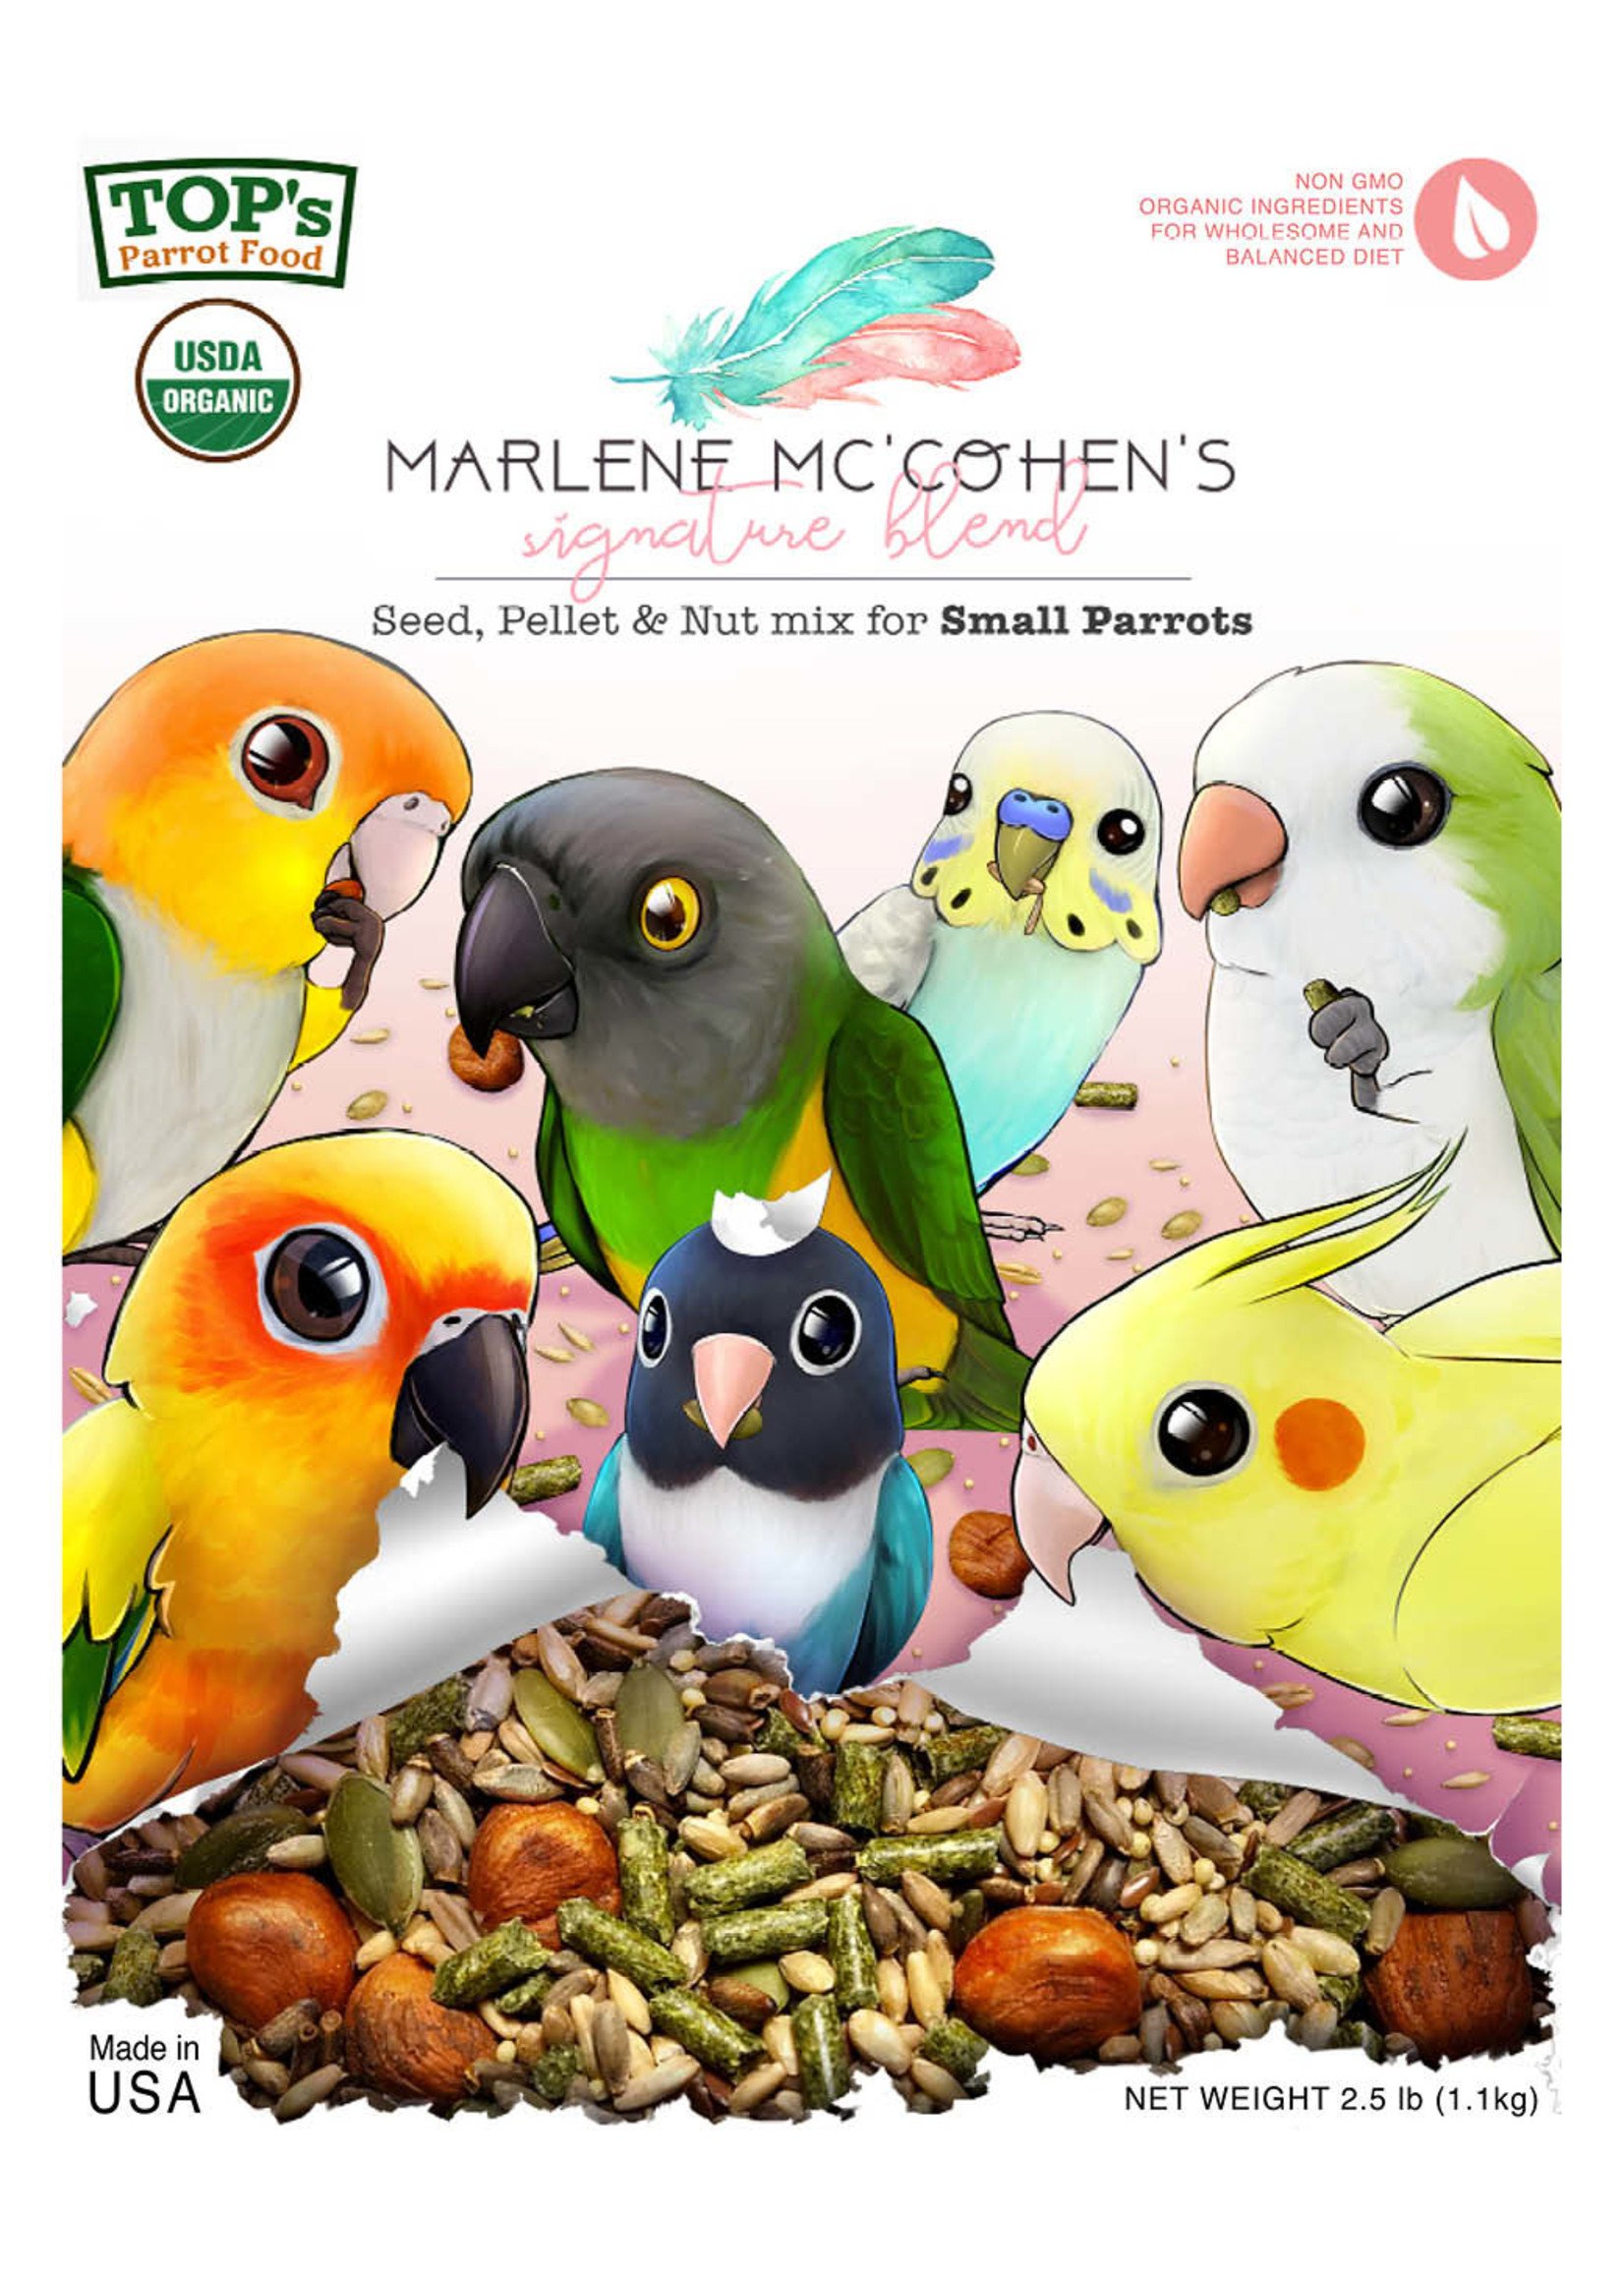 Totally Organics TOPS Marlene Mc'Cohen's Signature Blend Small Parrot